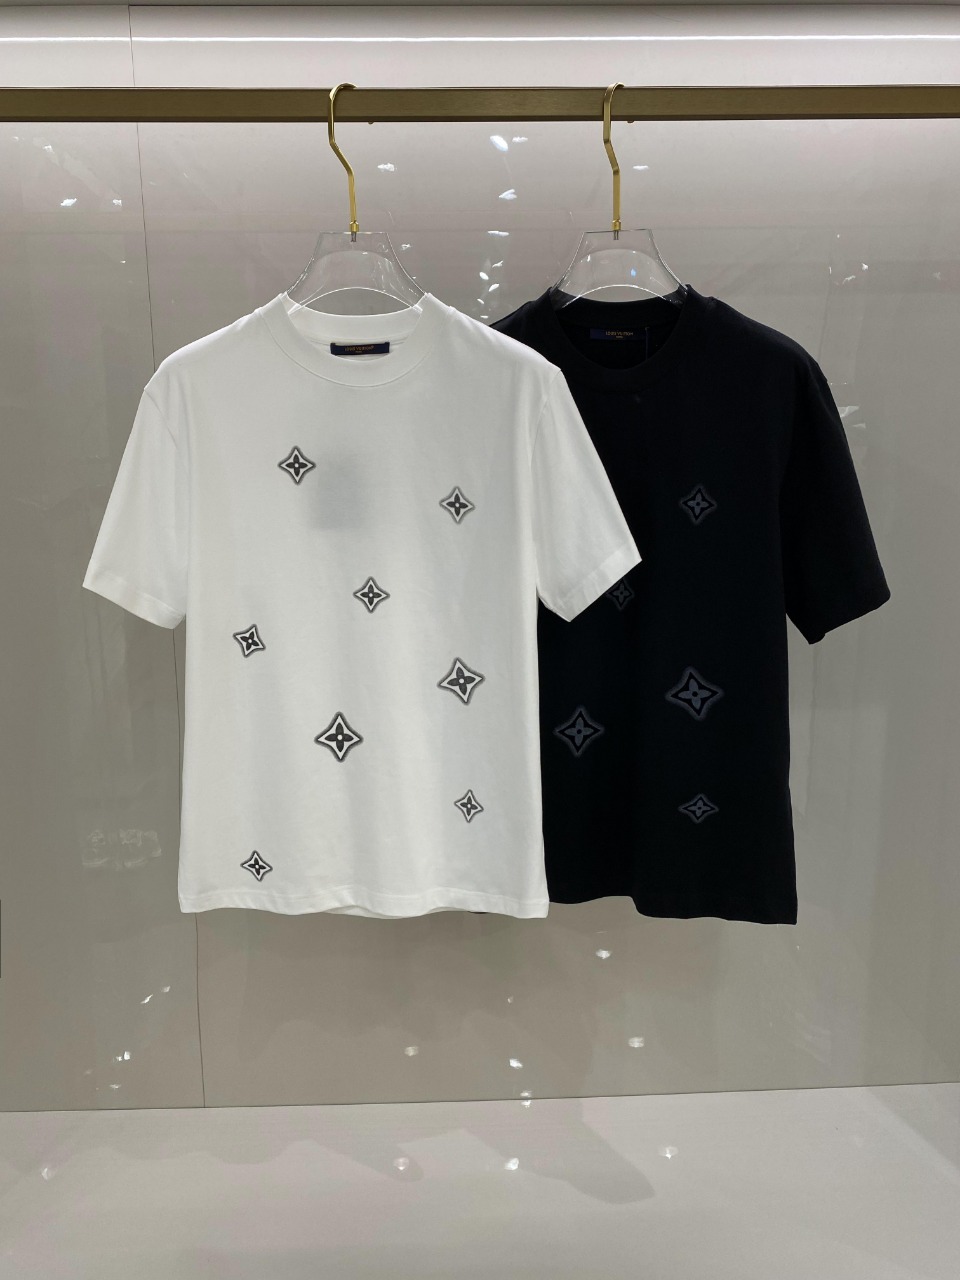 Louis Vuitton Clothing T-Shirt Black White Unisex Cotton Spring/Summer Collection Short Sleeve